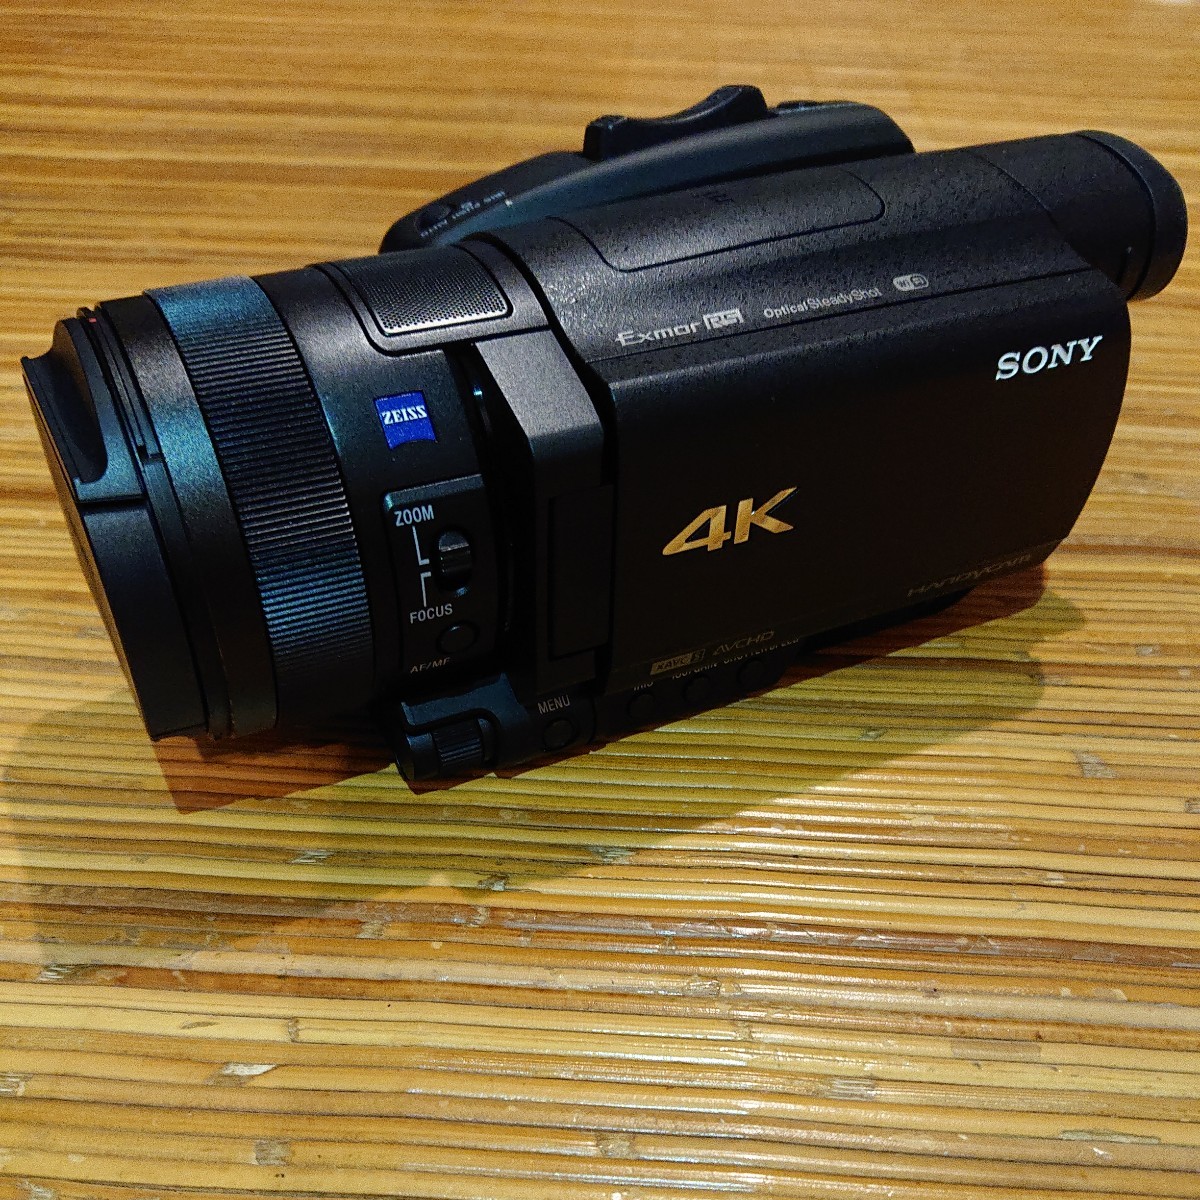 SONY ハンディカム デジタル4KビデオカメラFDR-AX700とキャリングケースLCS-U30とバッテリーパックNP-FV100AとガンマイクNP-FV100Aのセット_画像2